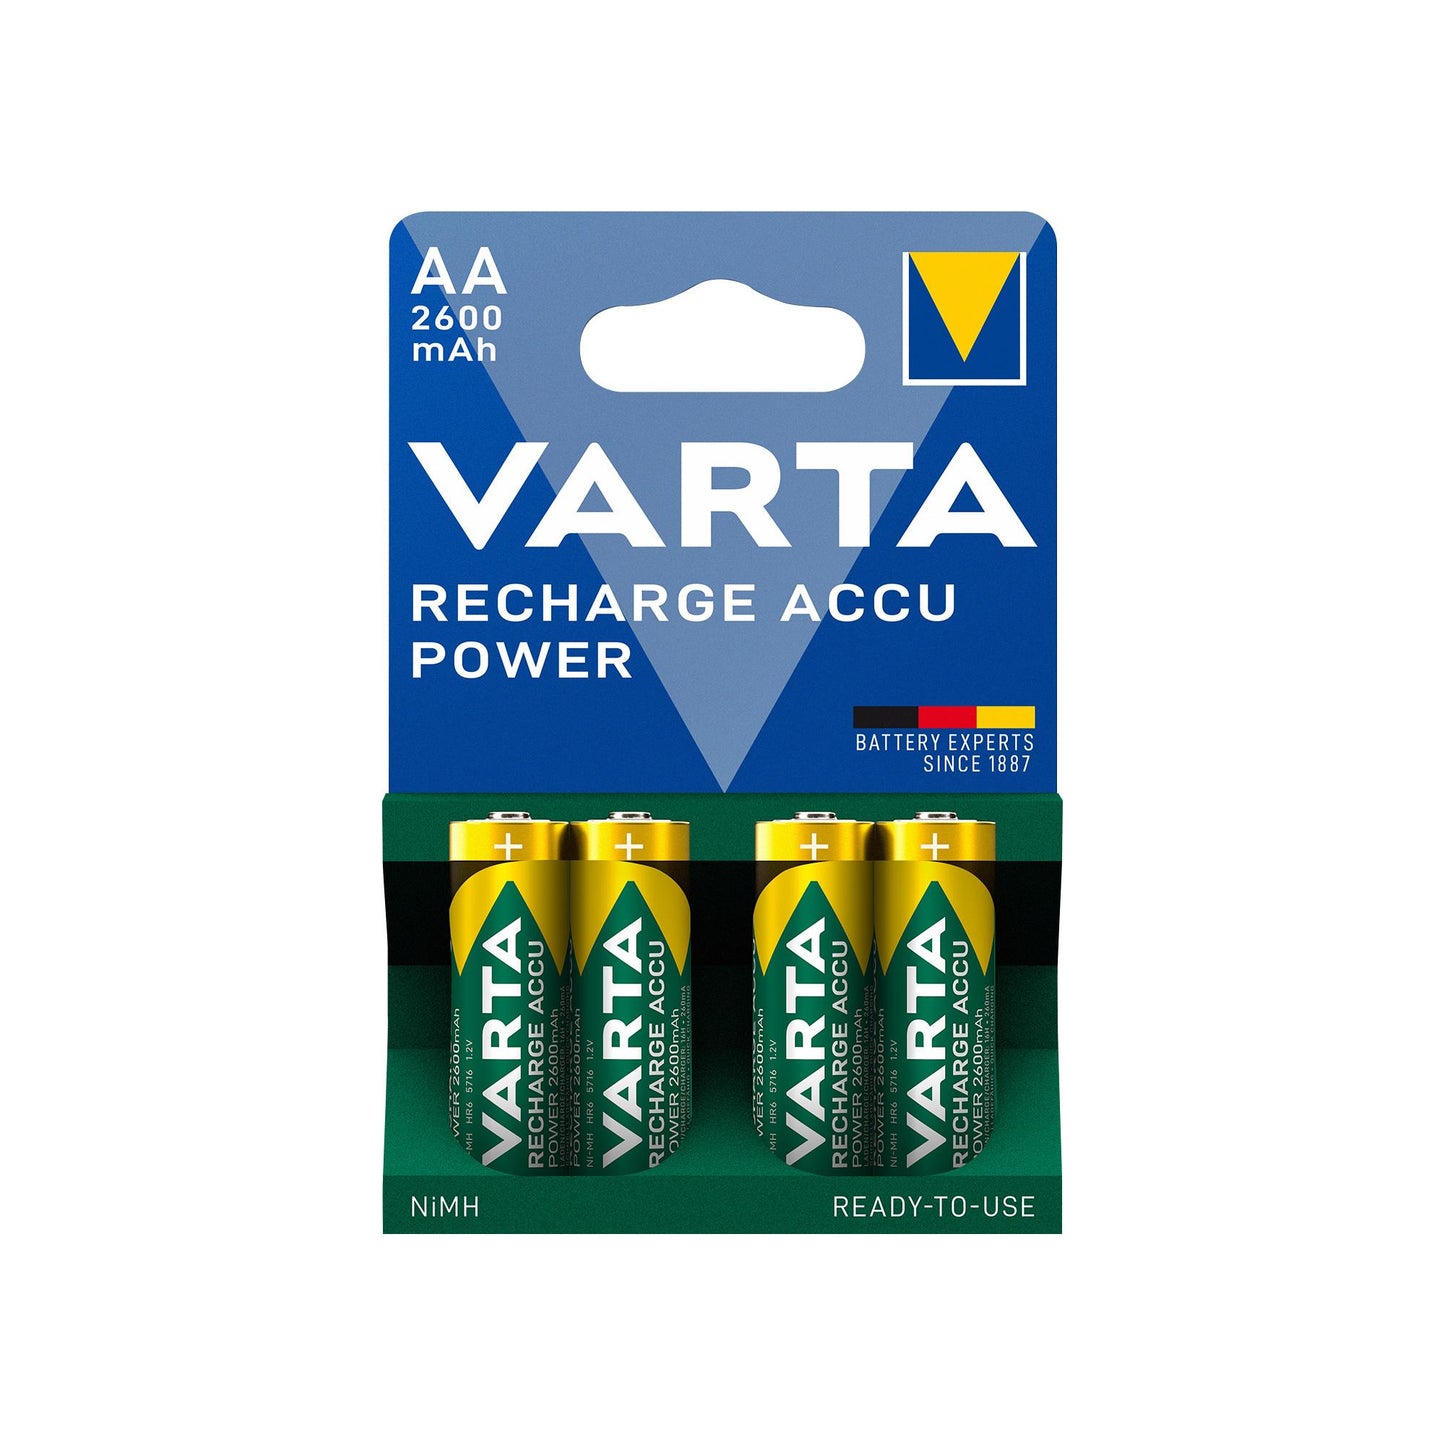 VARTA NiMH AA Mignon HR06 Akku, 1.2V/2600mAh, Accu Power, Pre-charged, Retail Blister (4-Pack)